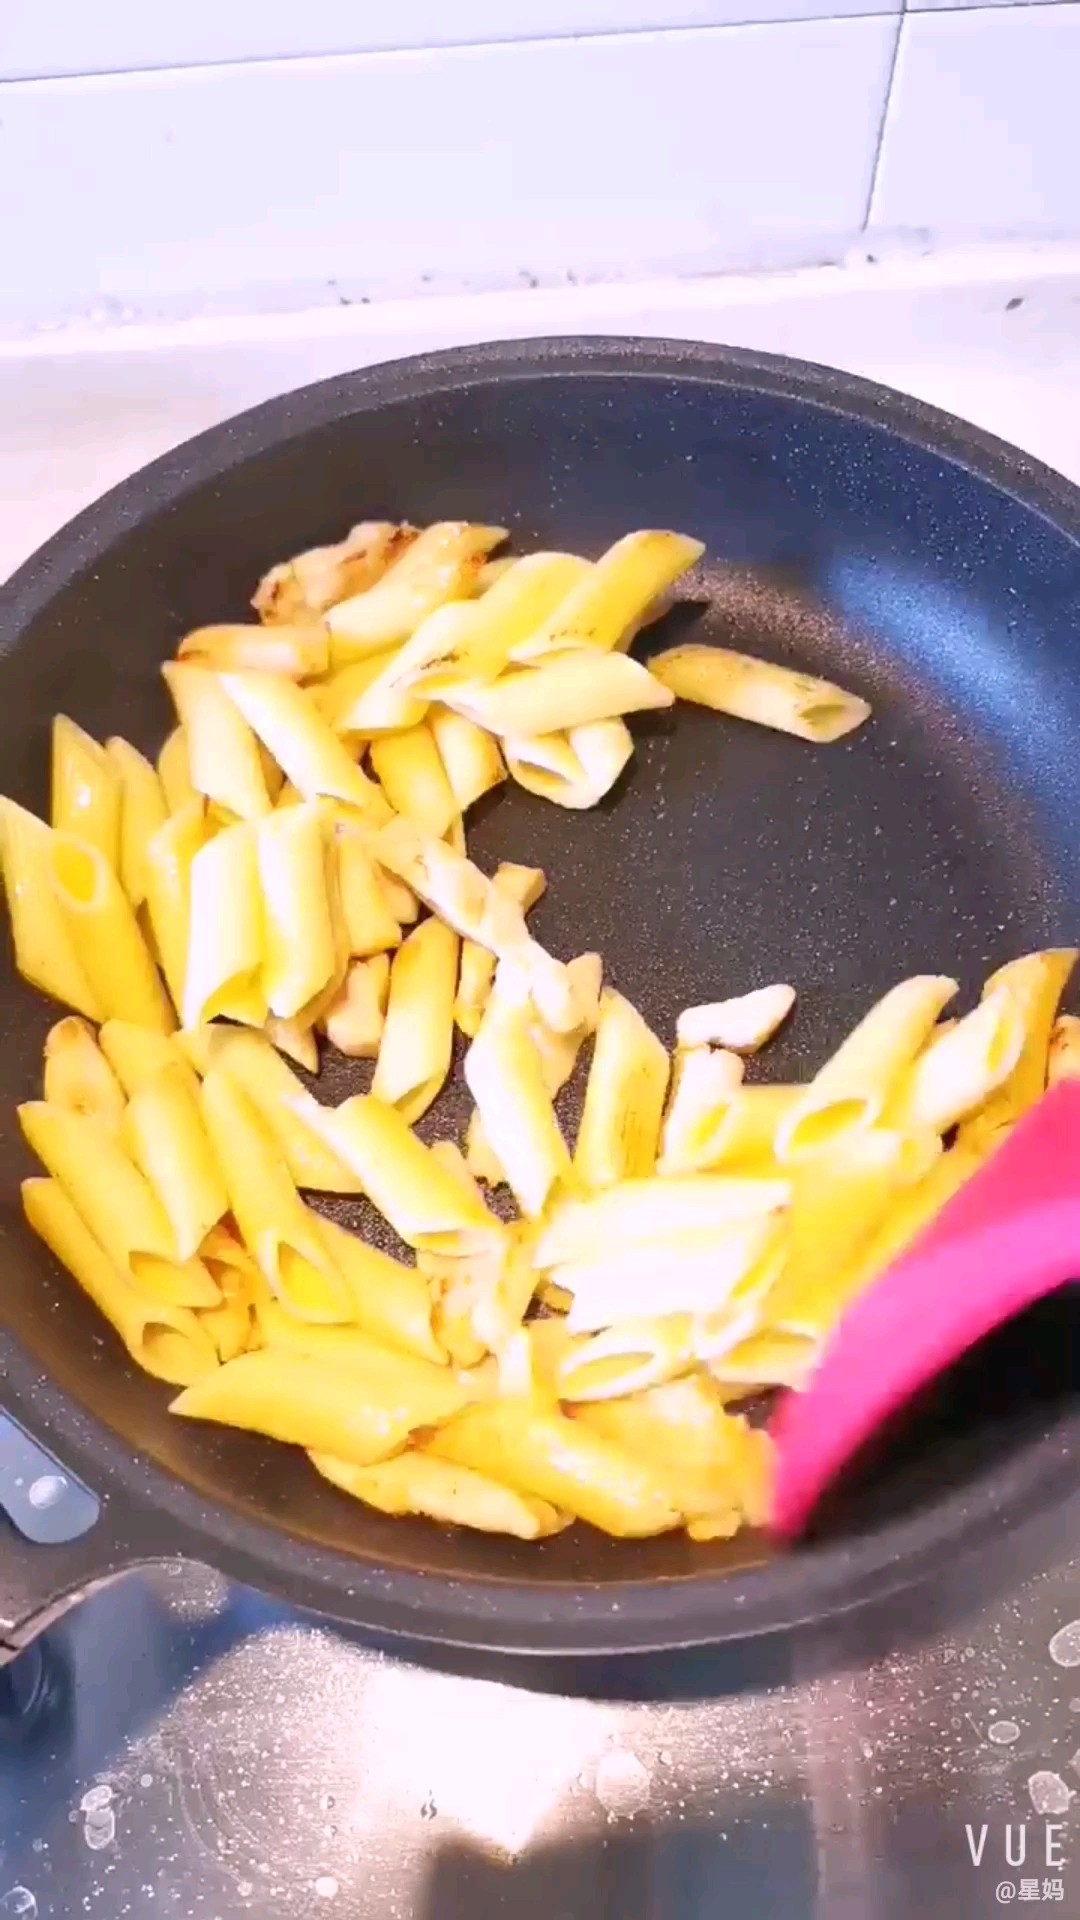 Stir-fried Macaroni with Chicken Breast recipe